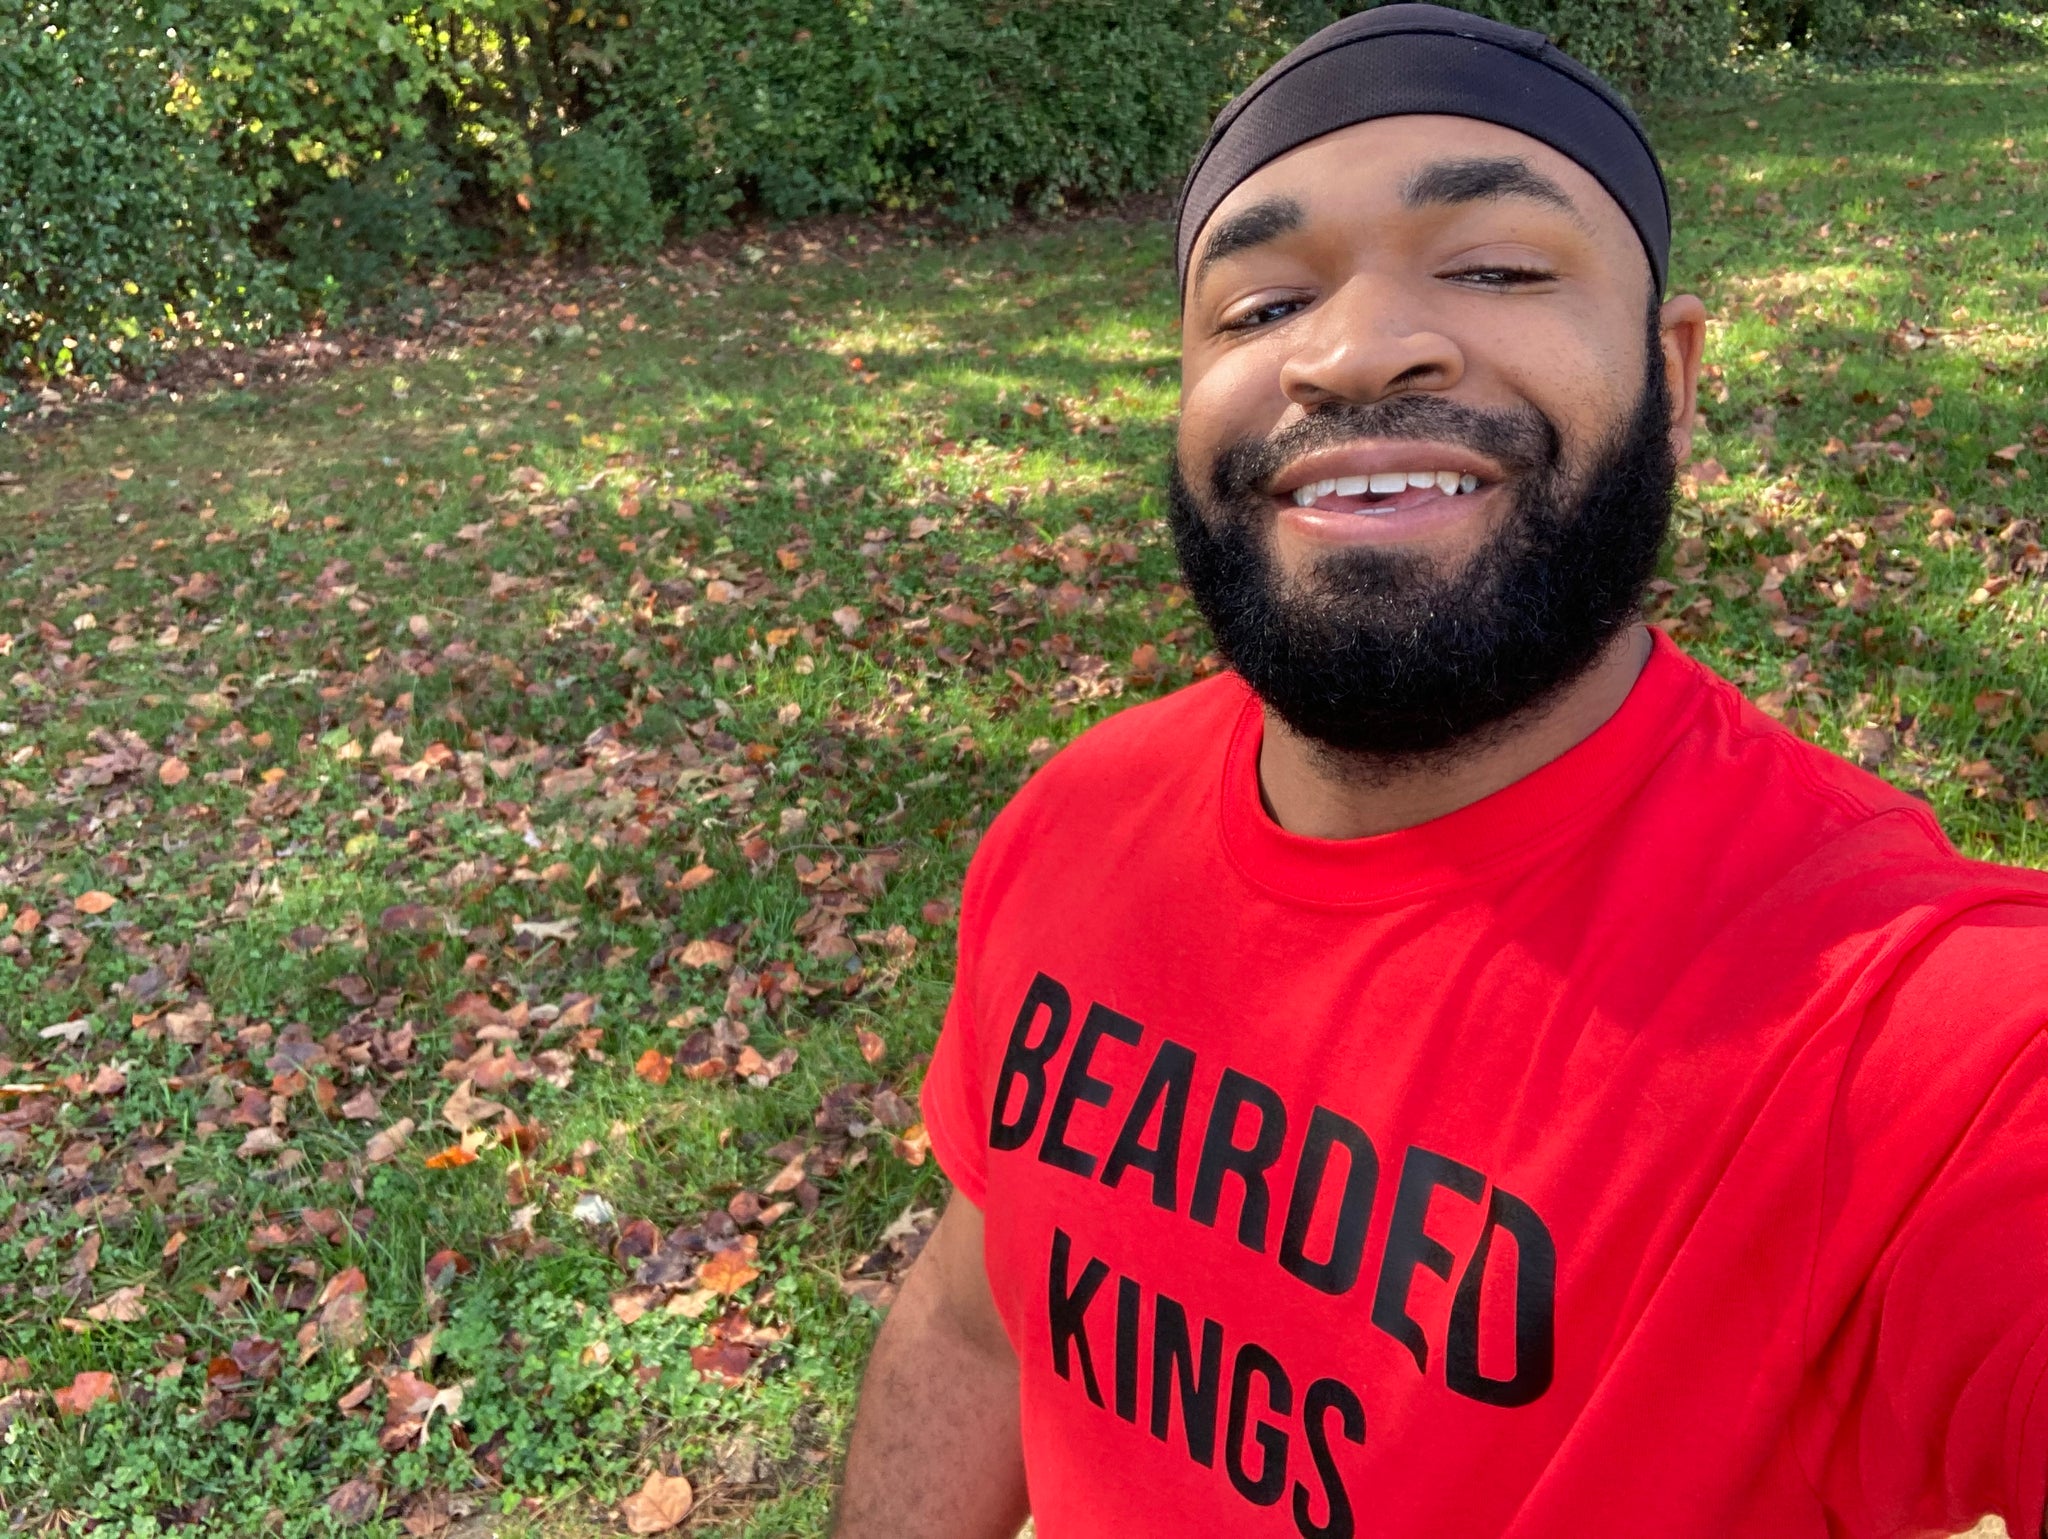 Red Bearded Kings shirt